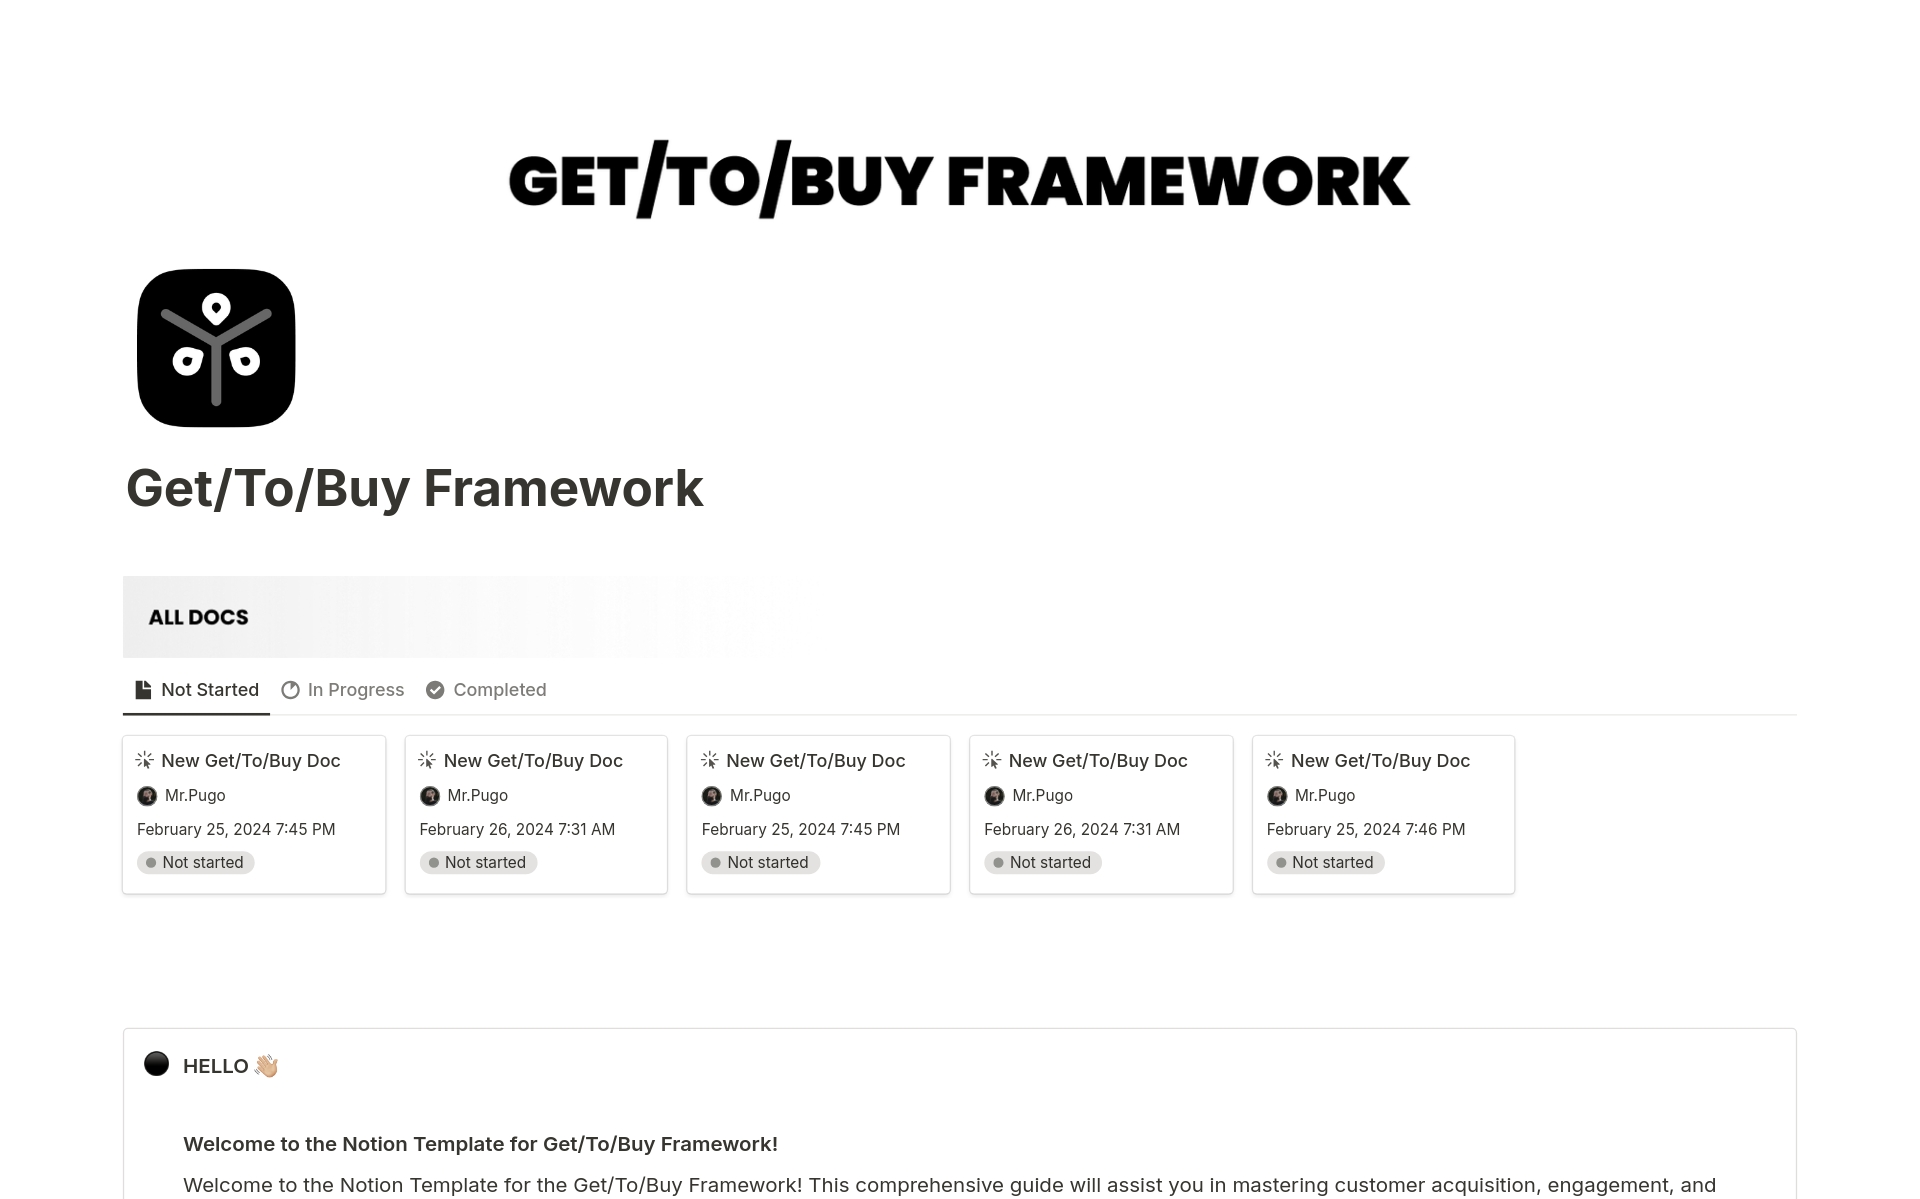 Aperçu du modèle de Get/To/Buy Framework